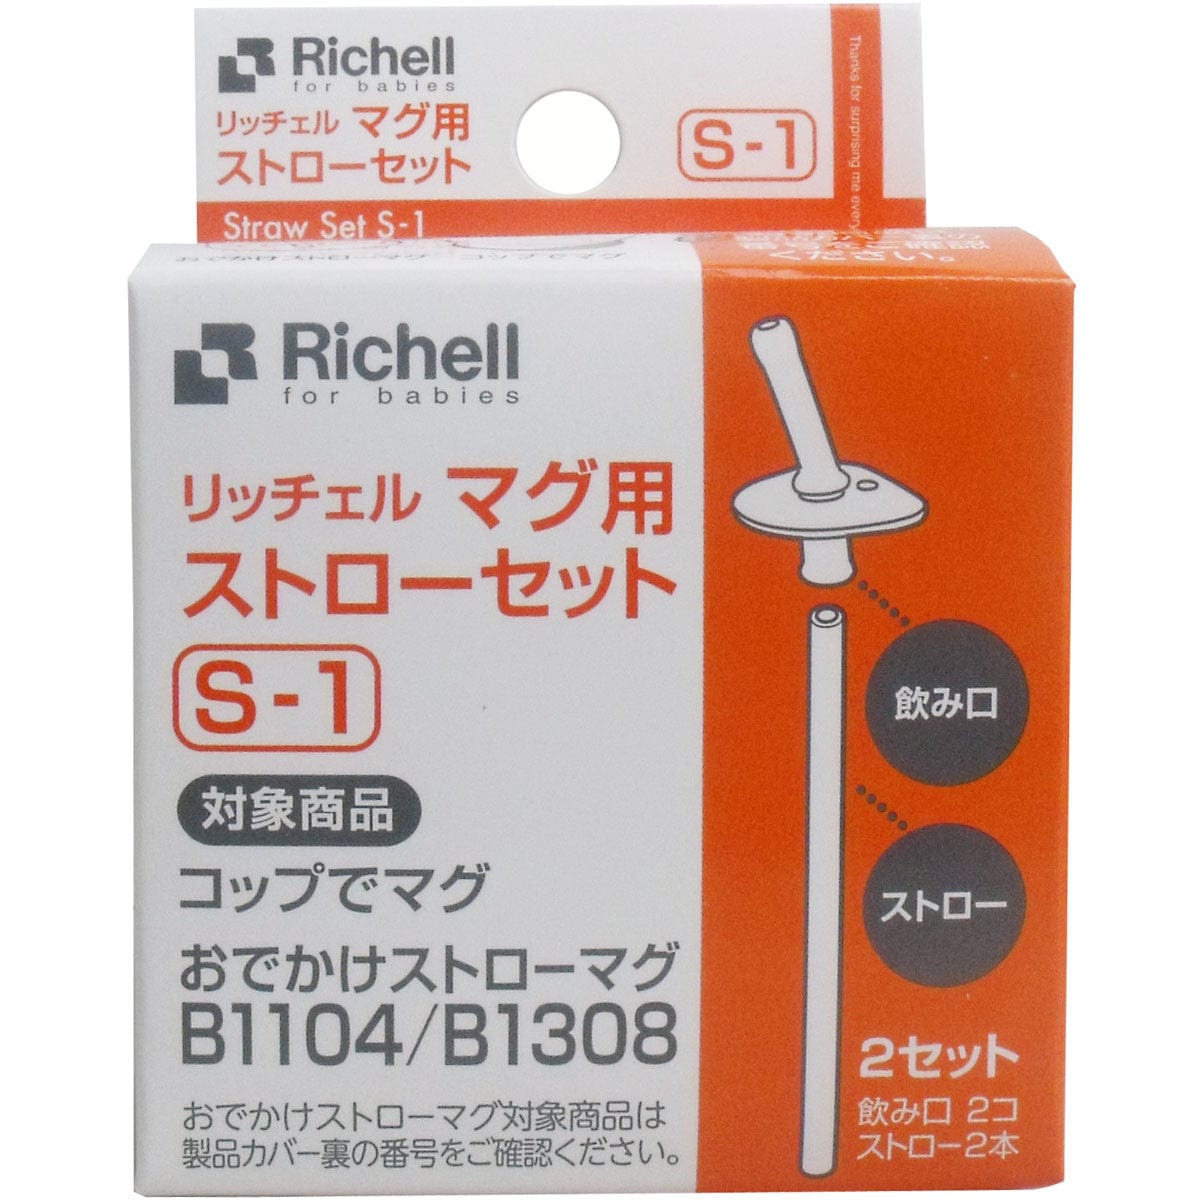 Richell - Aqulea Baby Straw Cup Mug S-1 Replacement Straw Set Spare Parts -  Richell Baby Spare Parts  Durio.sg